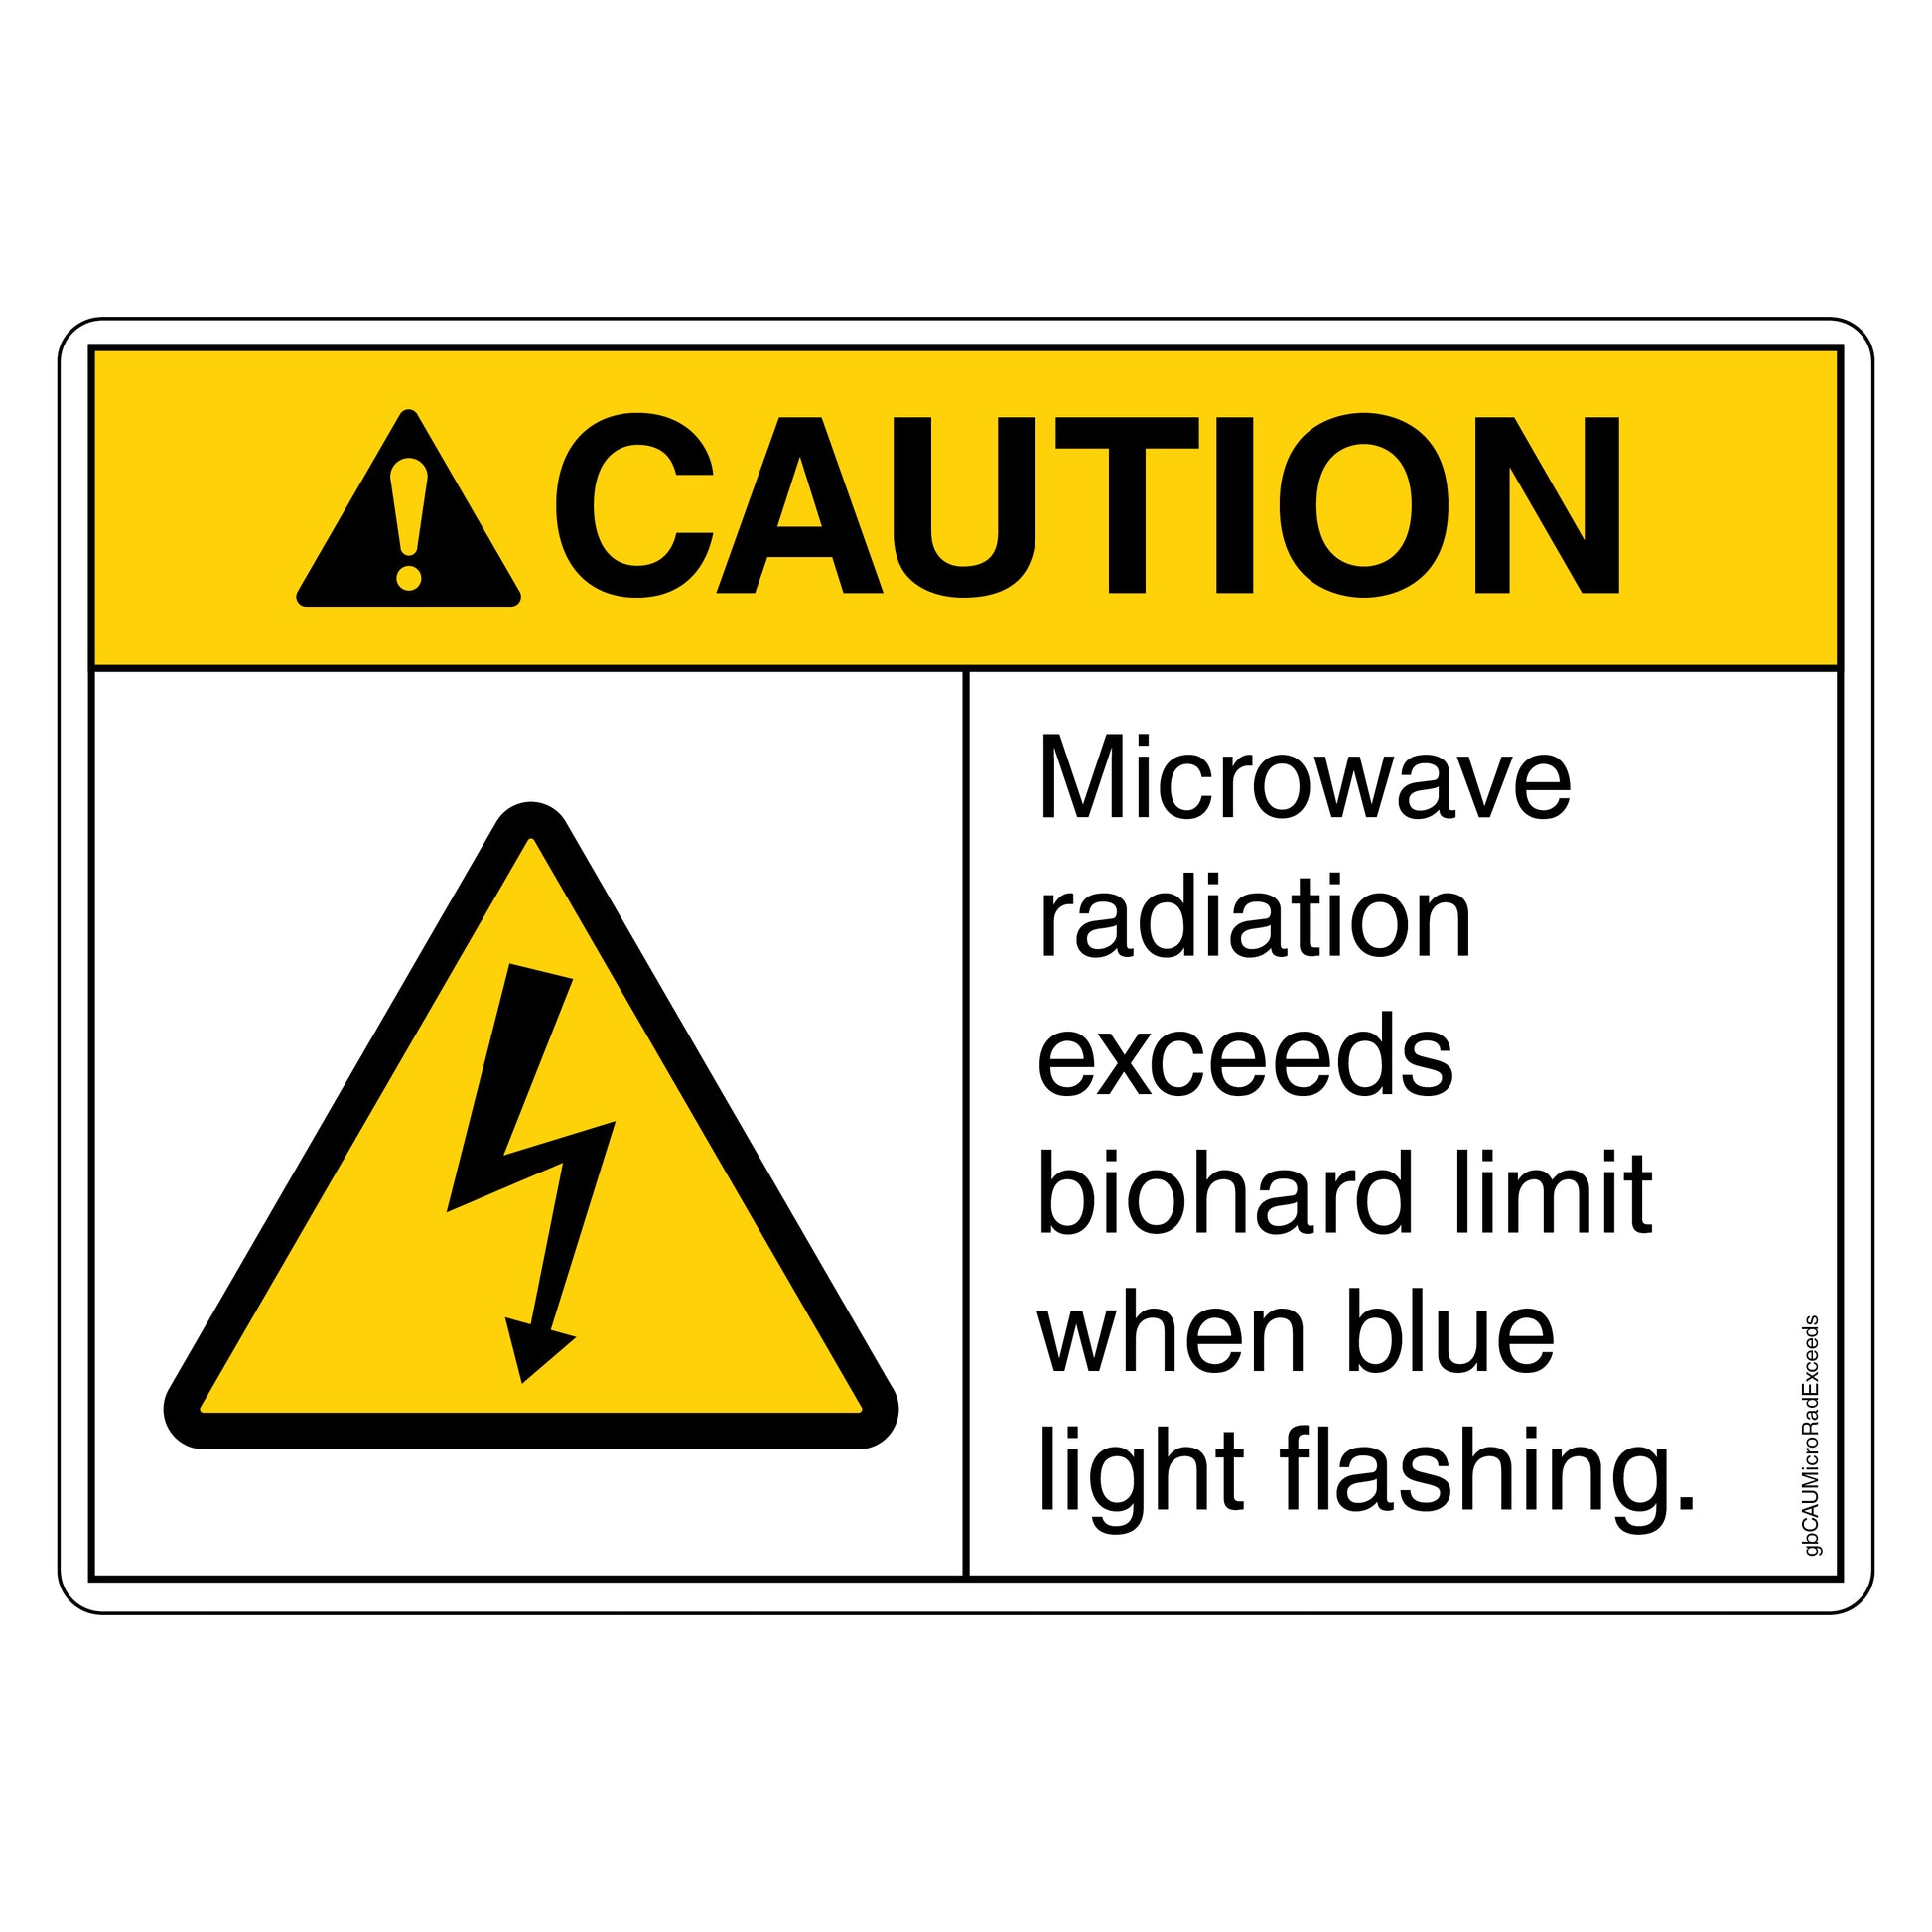 Caution Microwave Radiation Exceeds Biohazard Limit When Blue Light Flashing Decal.